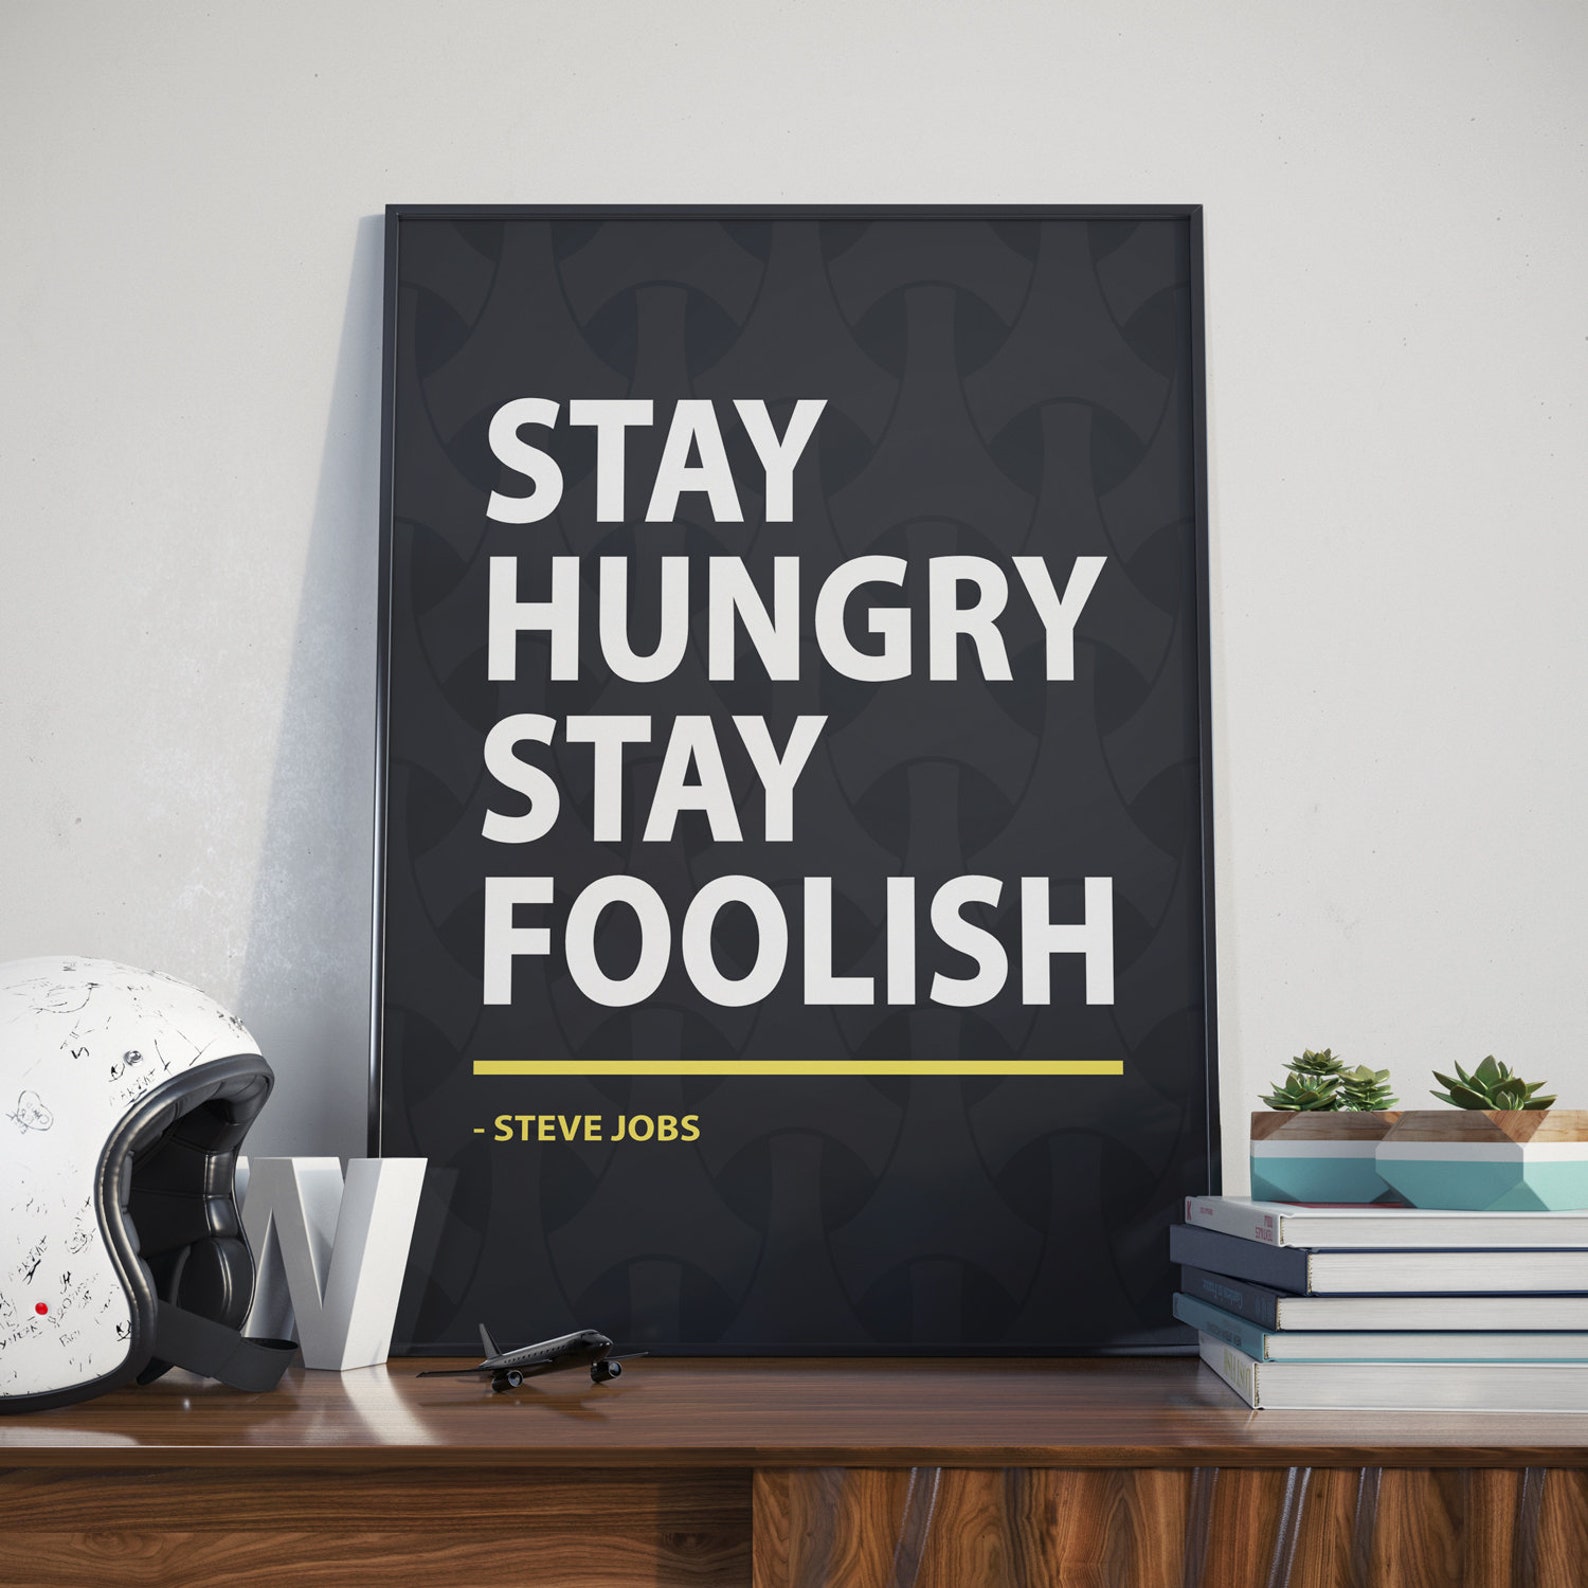 Stay hungry stay foolish. Stay hungry stay Foolish перевод. Цитата stay hungry stay Foolish. Stay hungry stay Foolish обои.